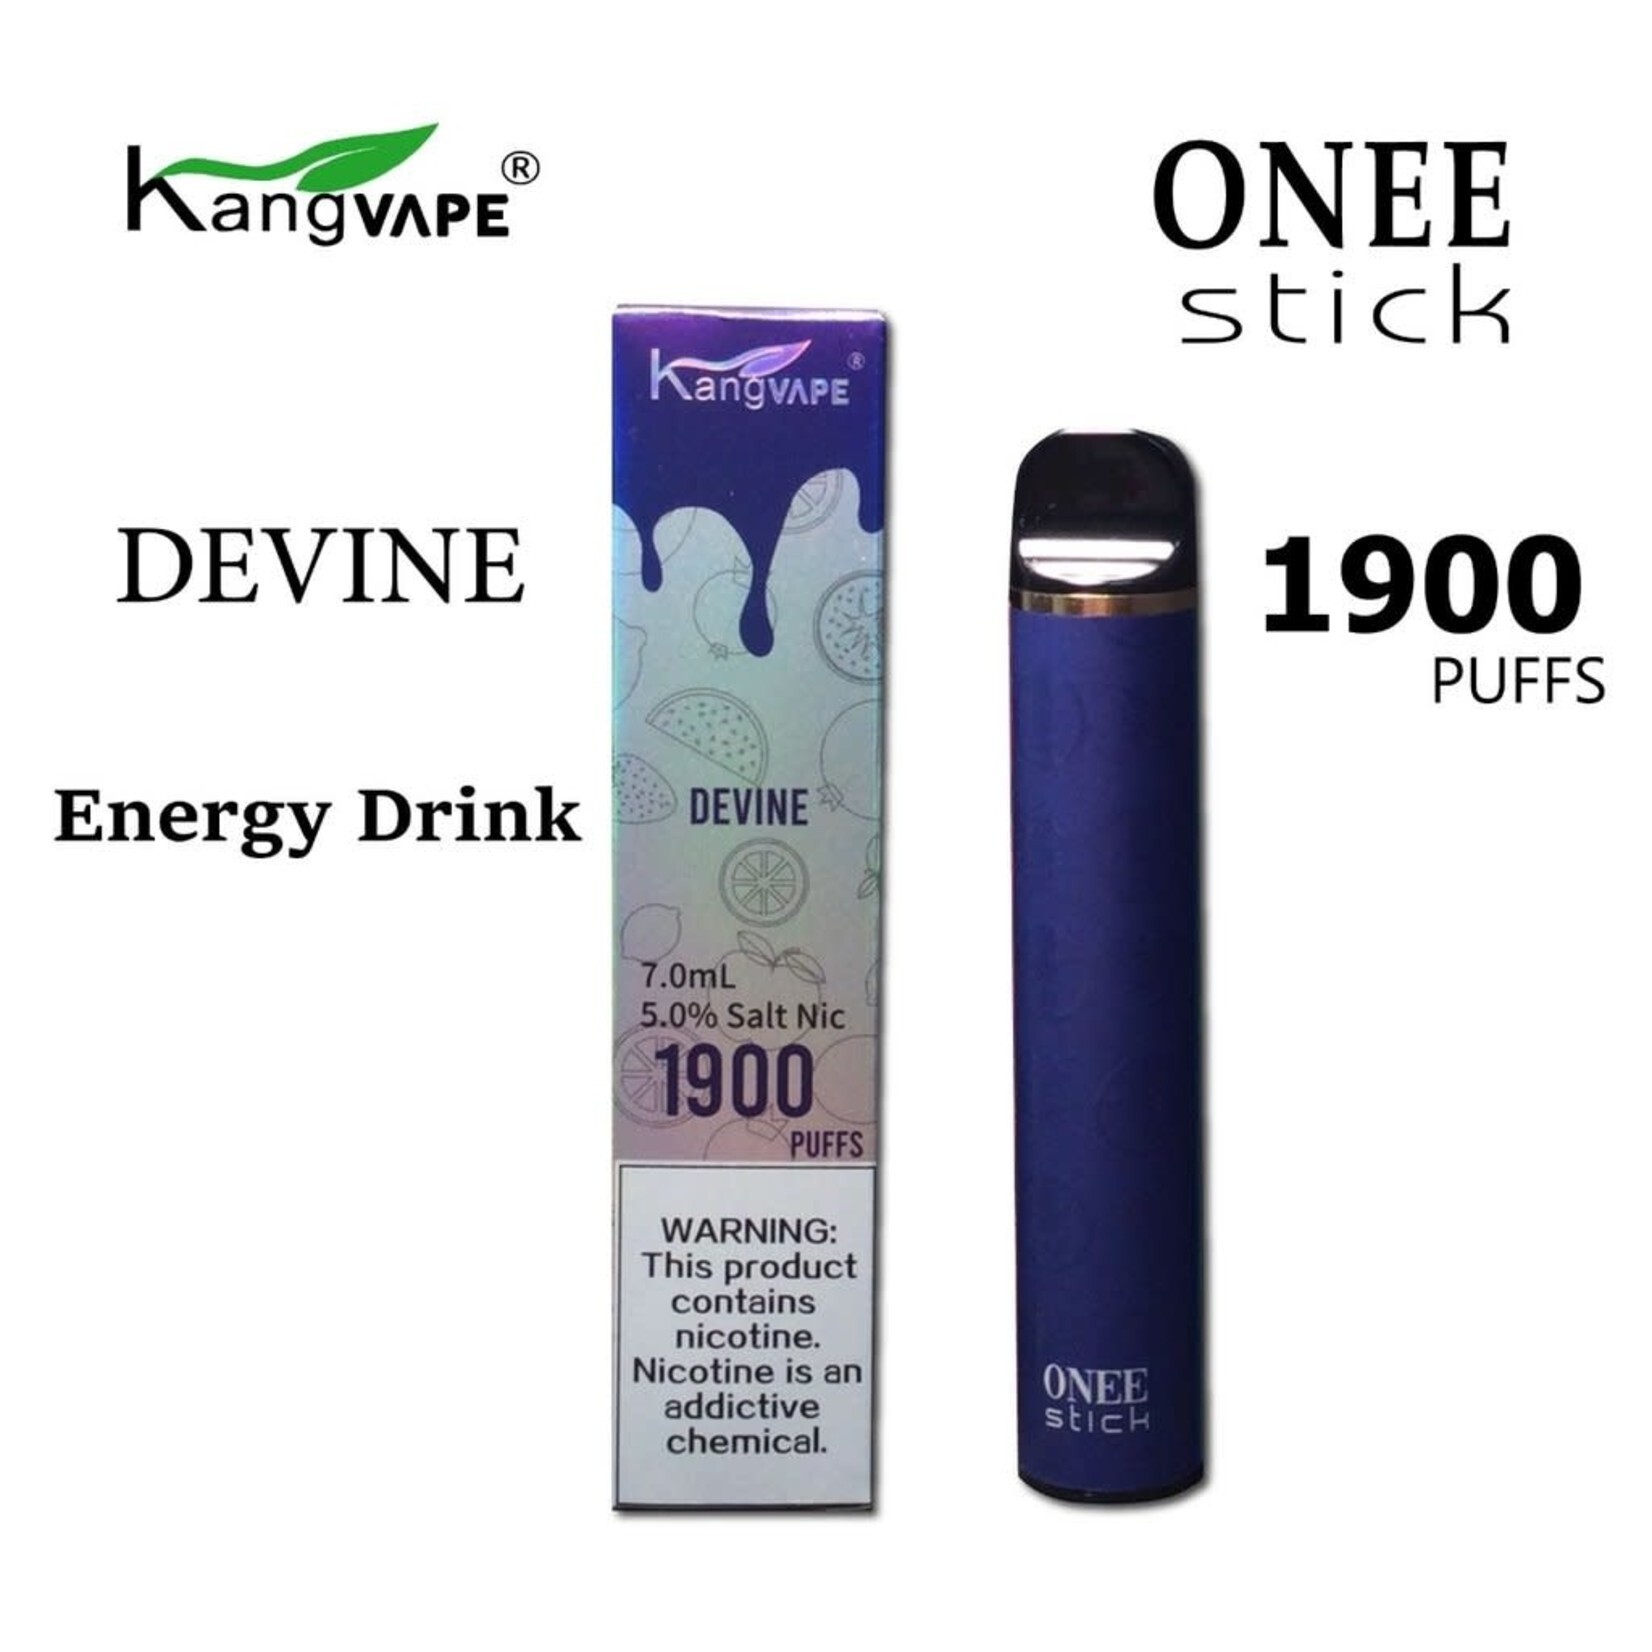 Kang Vape 1900 Puff 5% Onee Stick Devine (Energy Drink)